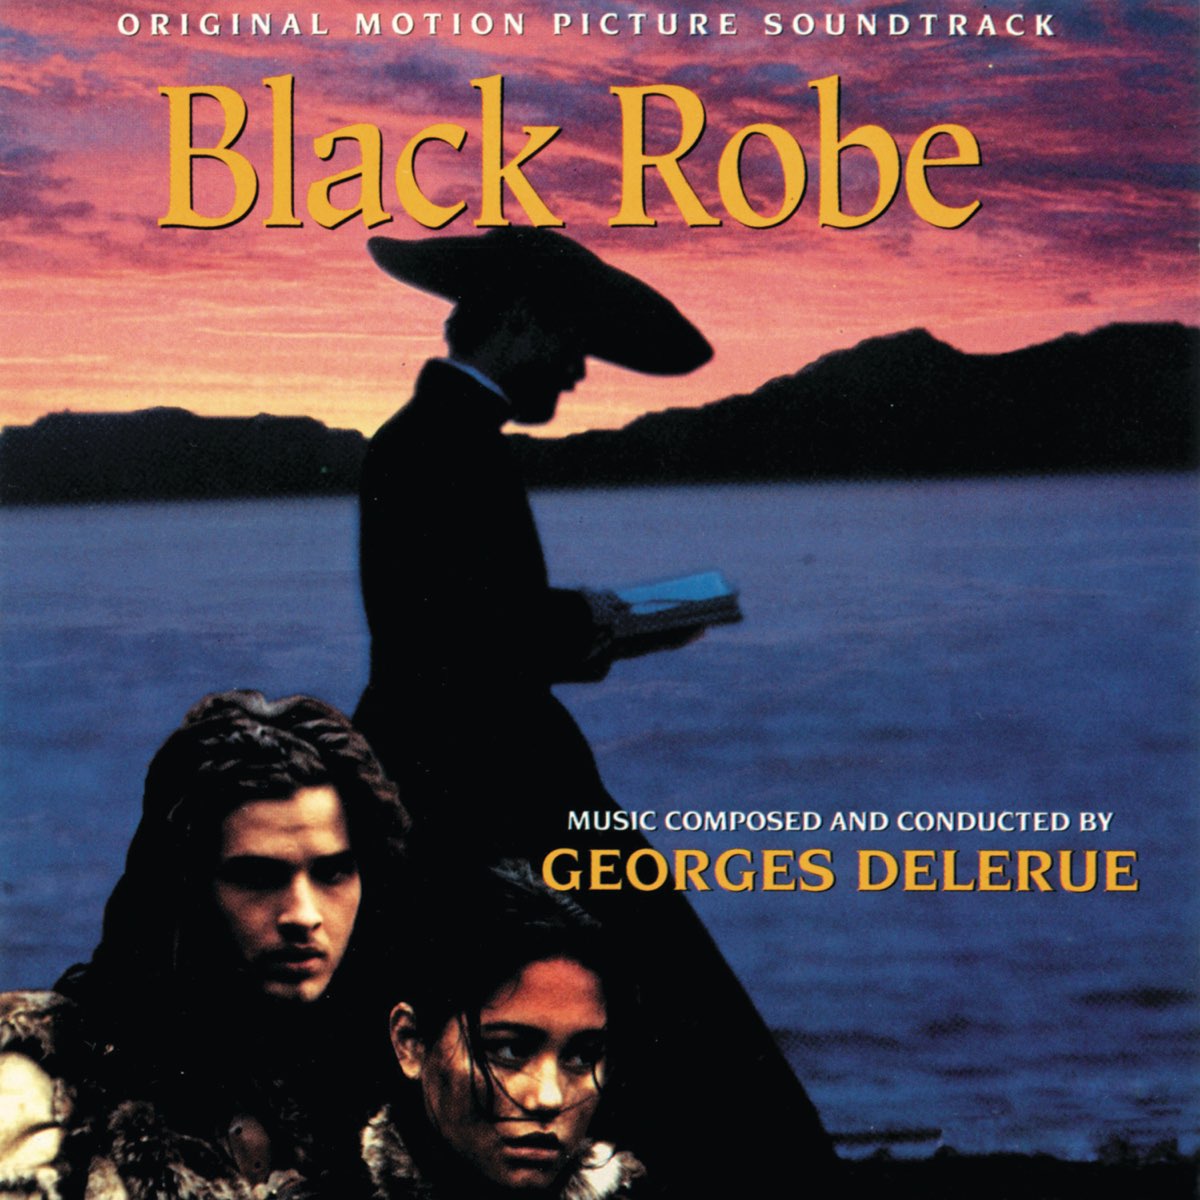 Black Robe (Original Motion Picture Soundtrack) - Album by Georges Delerue  - Apple Music